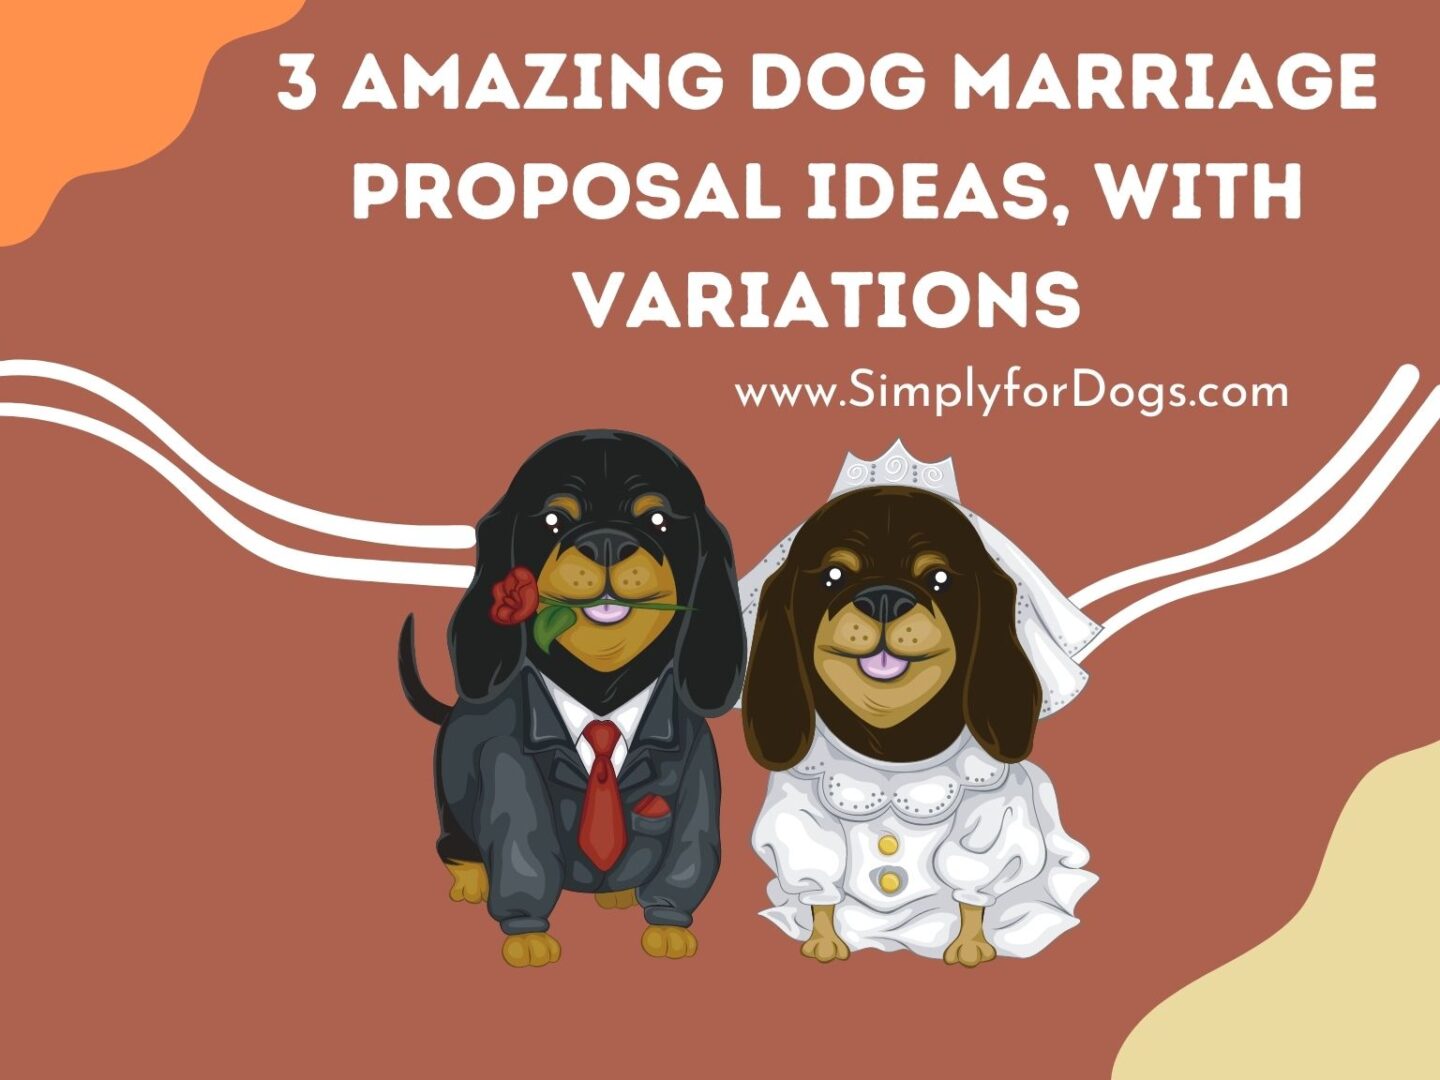 3 Amazing Dog Marriage Proposal Ideas (Stupid or Brilliant?)